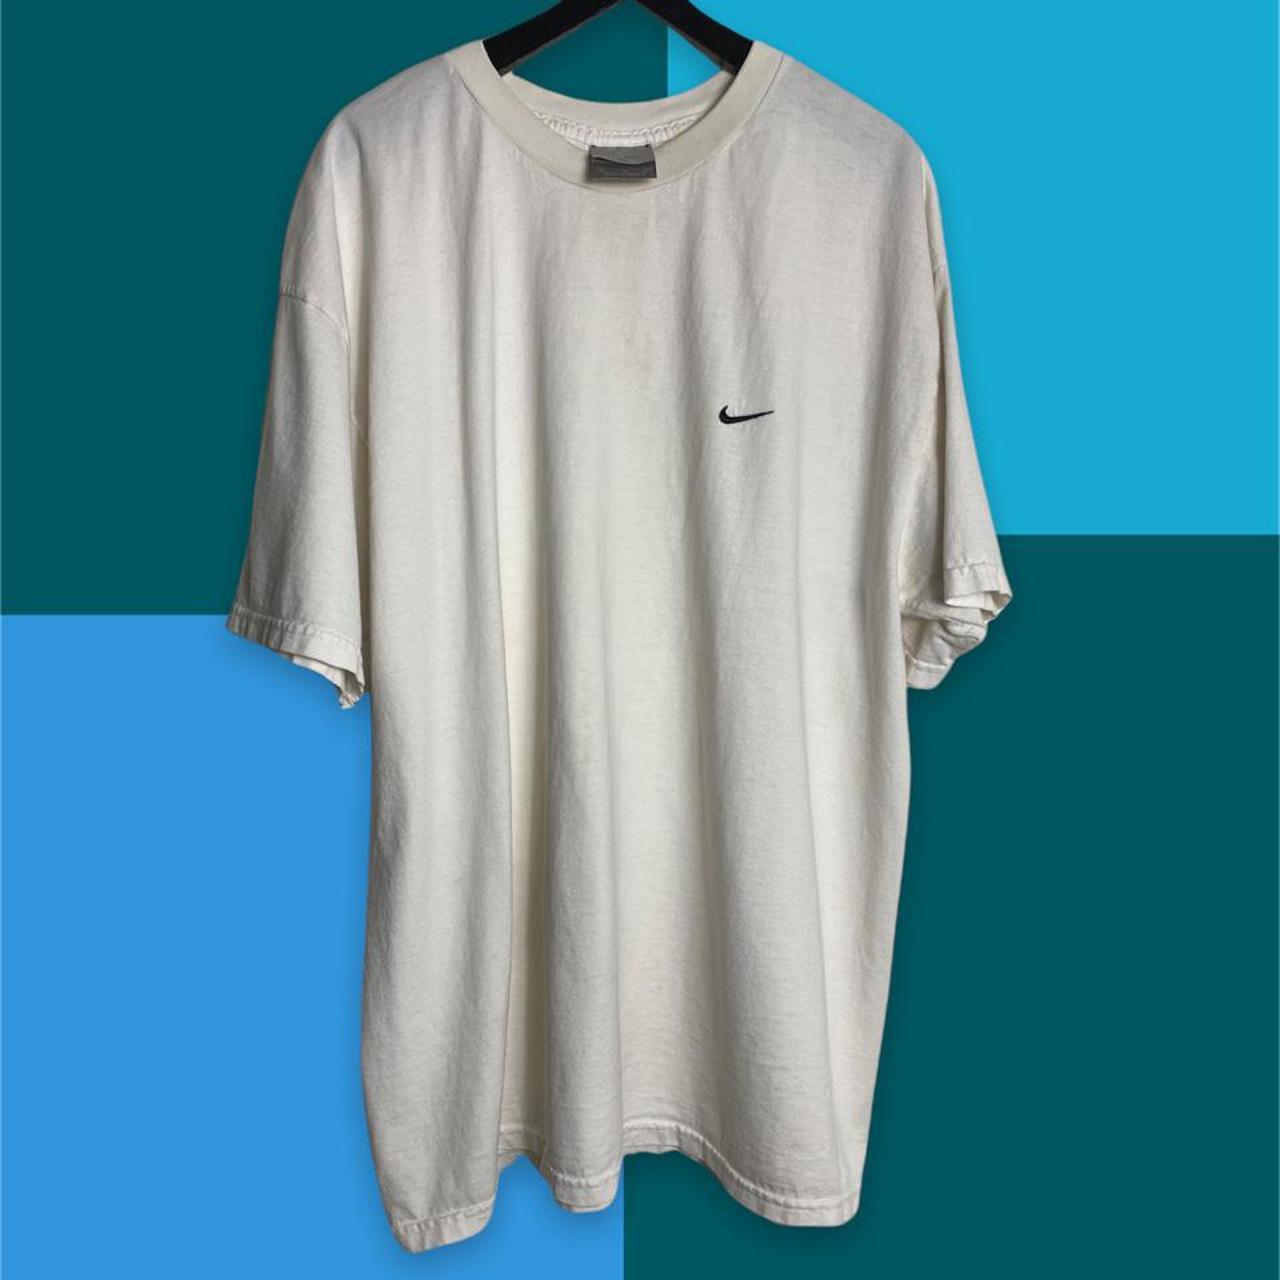 Product Image 1 - Vintage 2000s Nike Swoosh T-shirt